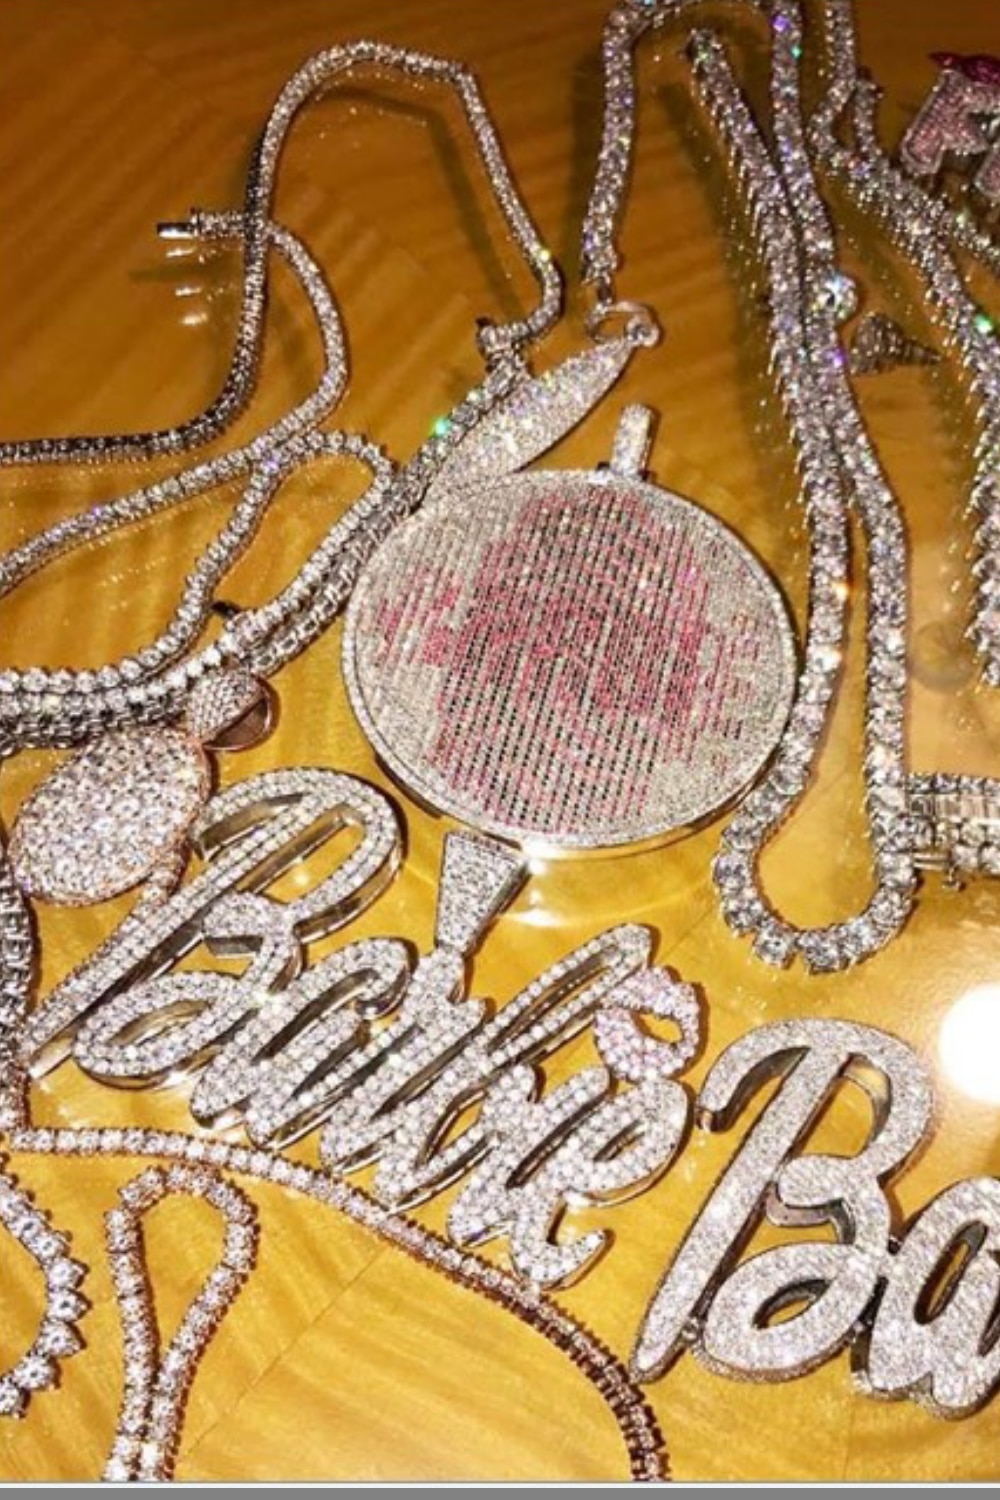 Nicki Minaj dragged to court for ‘damaging borrowed jewelry’